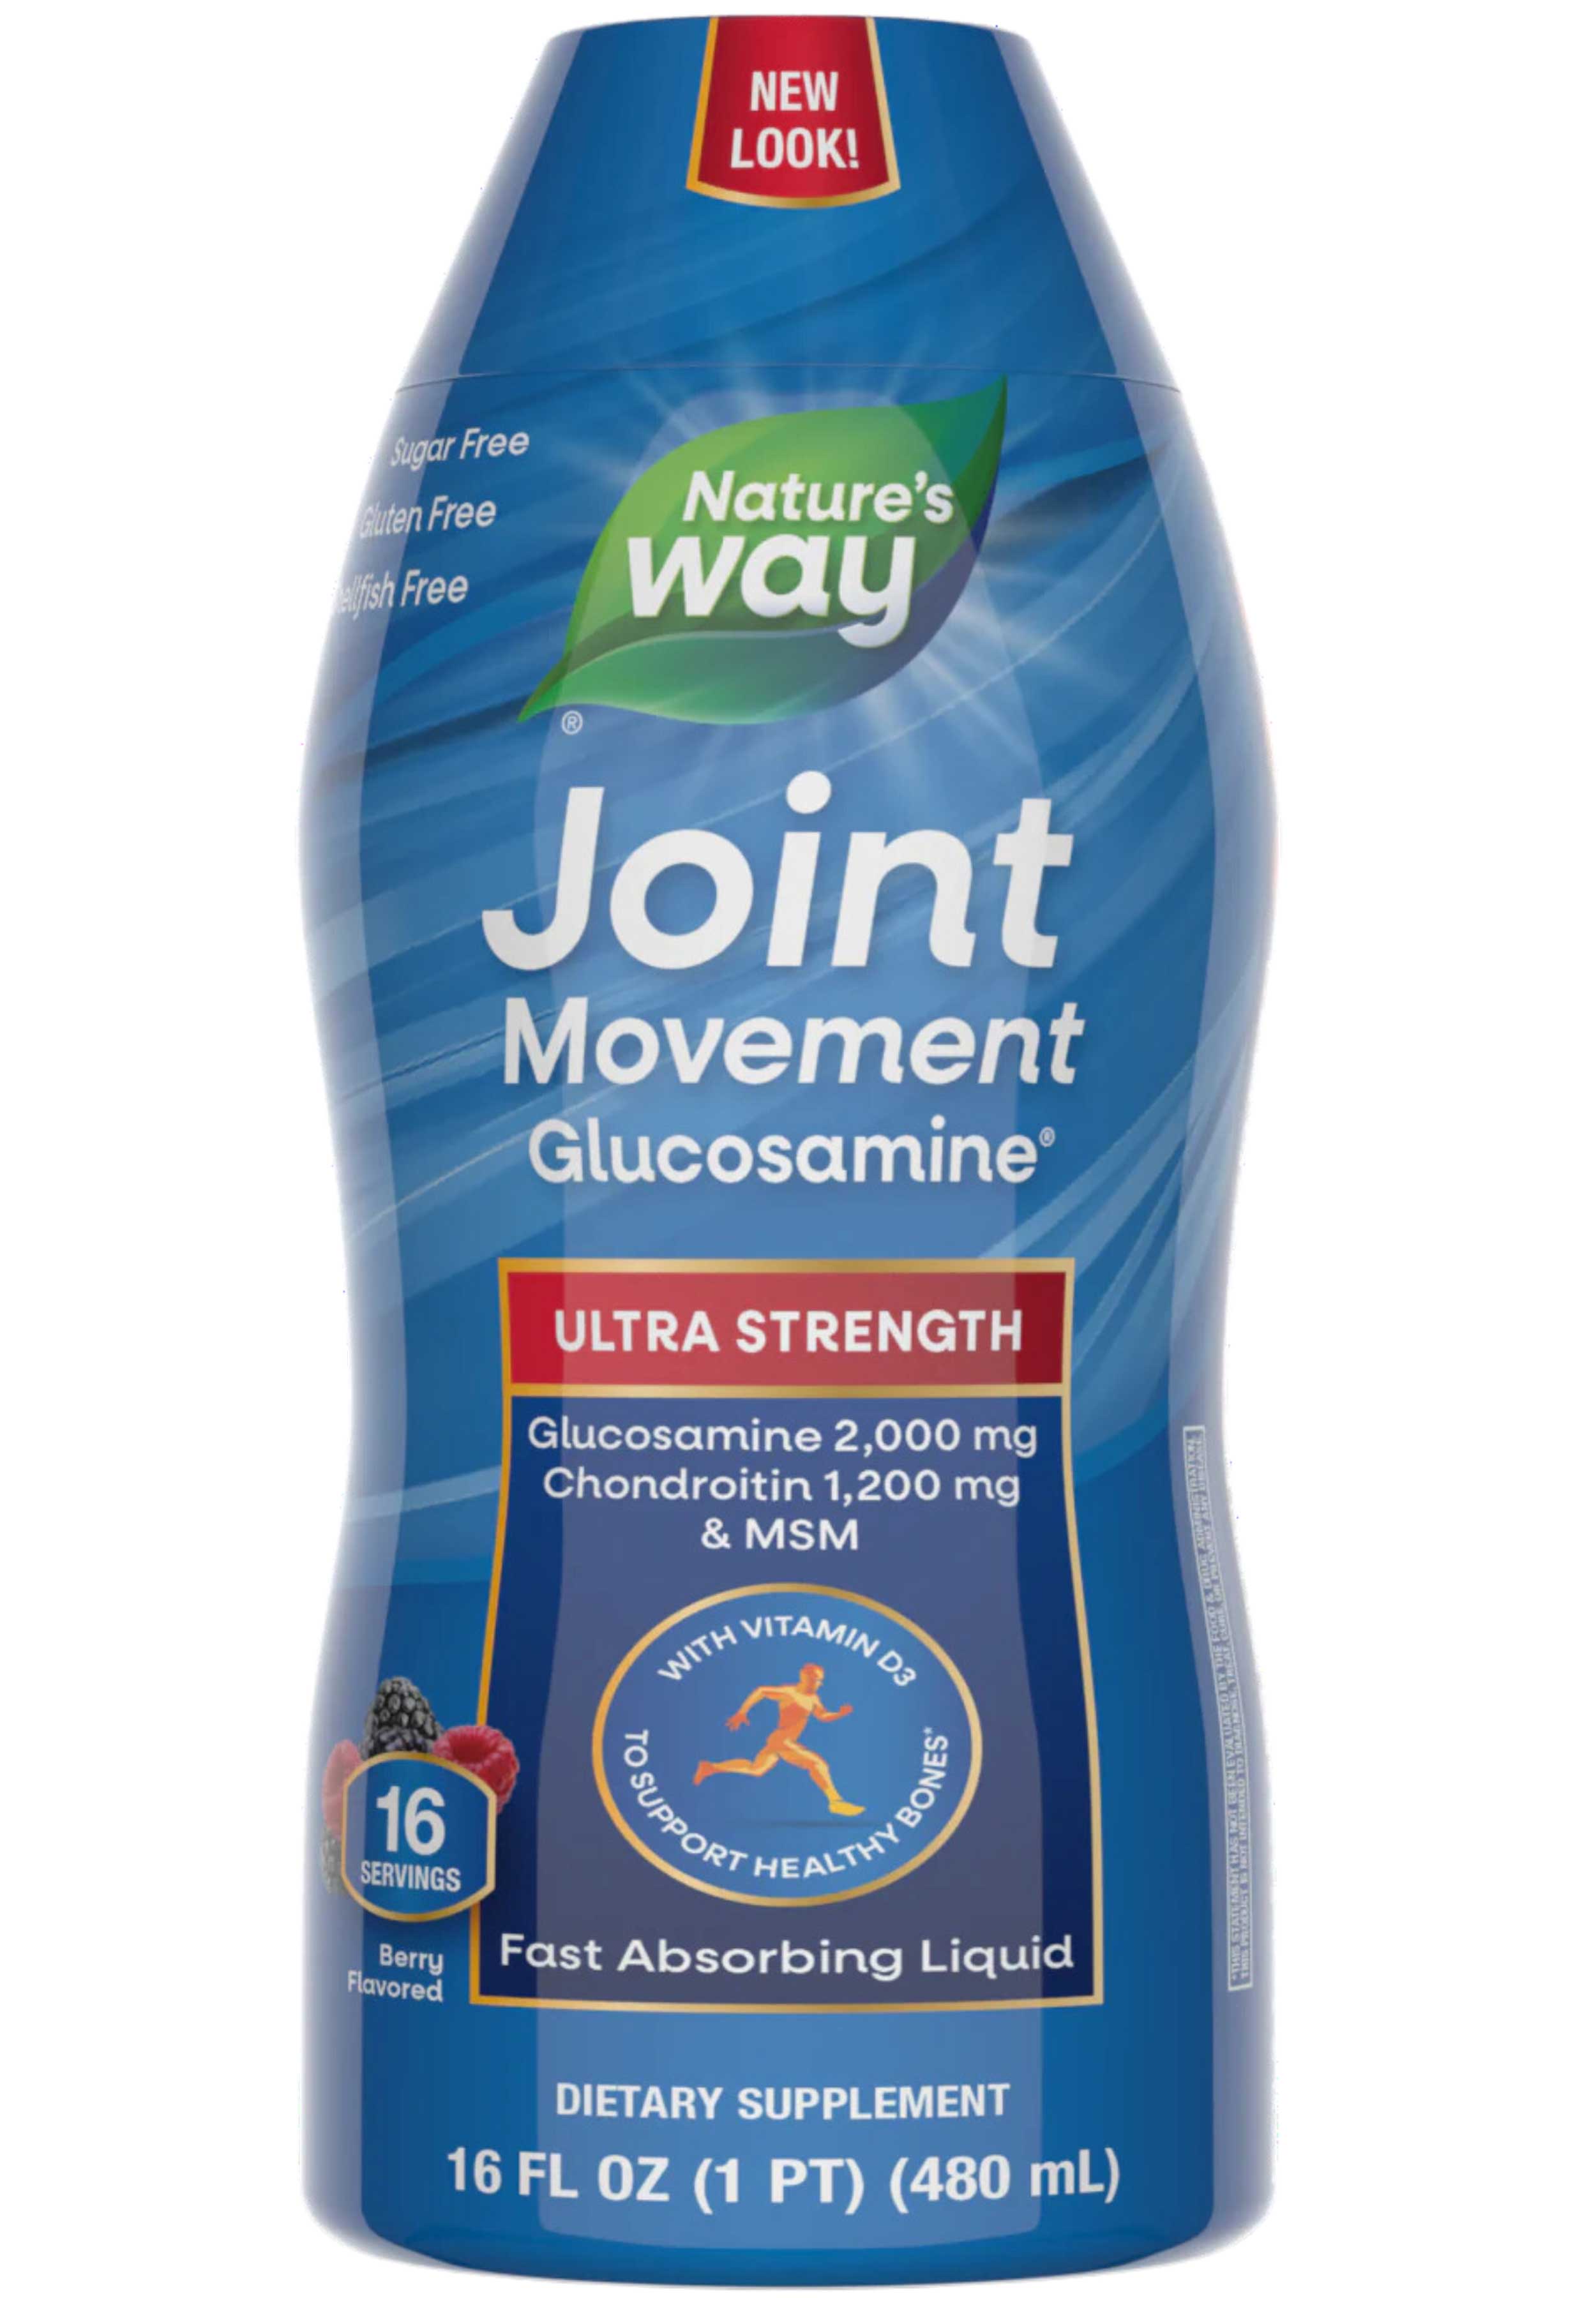 Nature's Way Joint Movement Glucosamine Liquid